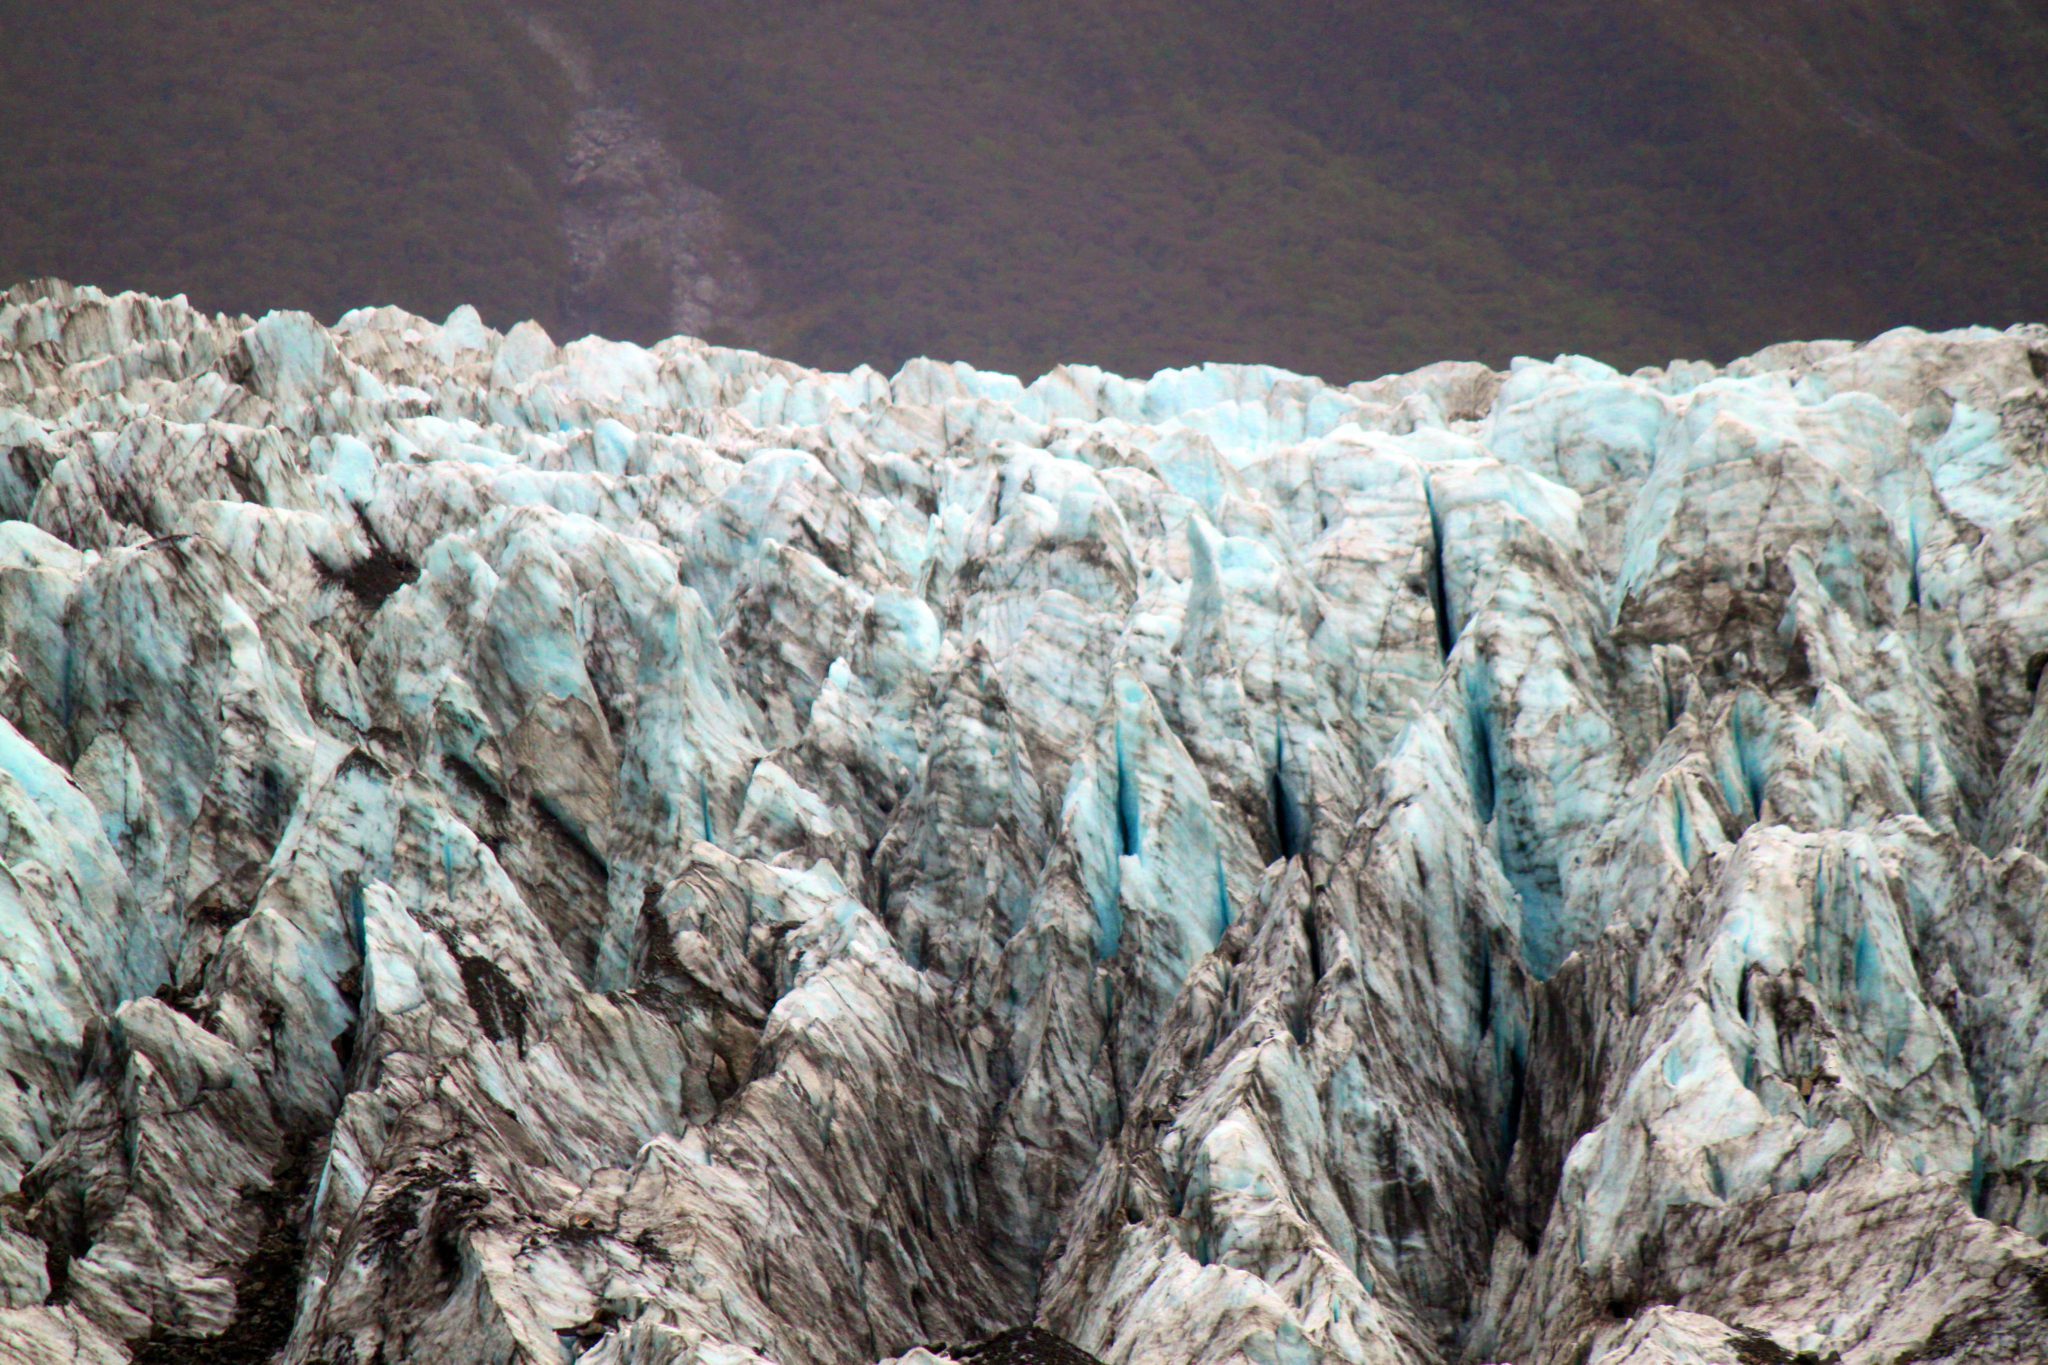 Visit New Zealand's impressive Fox Glacier | 11 things to see on New Zealand's West Coast #newzealand #westcoast #foxglacier